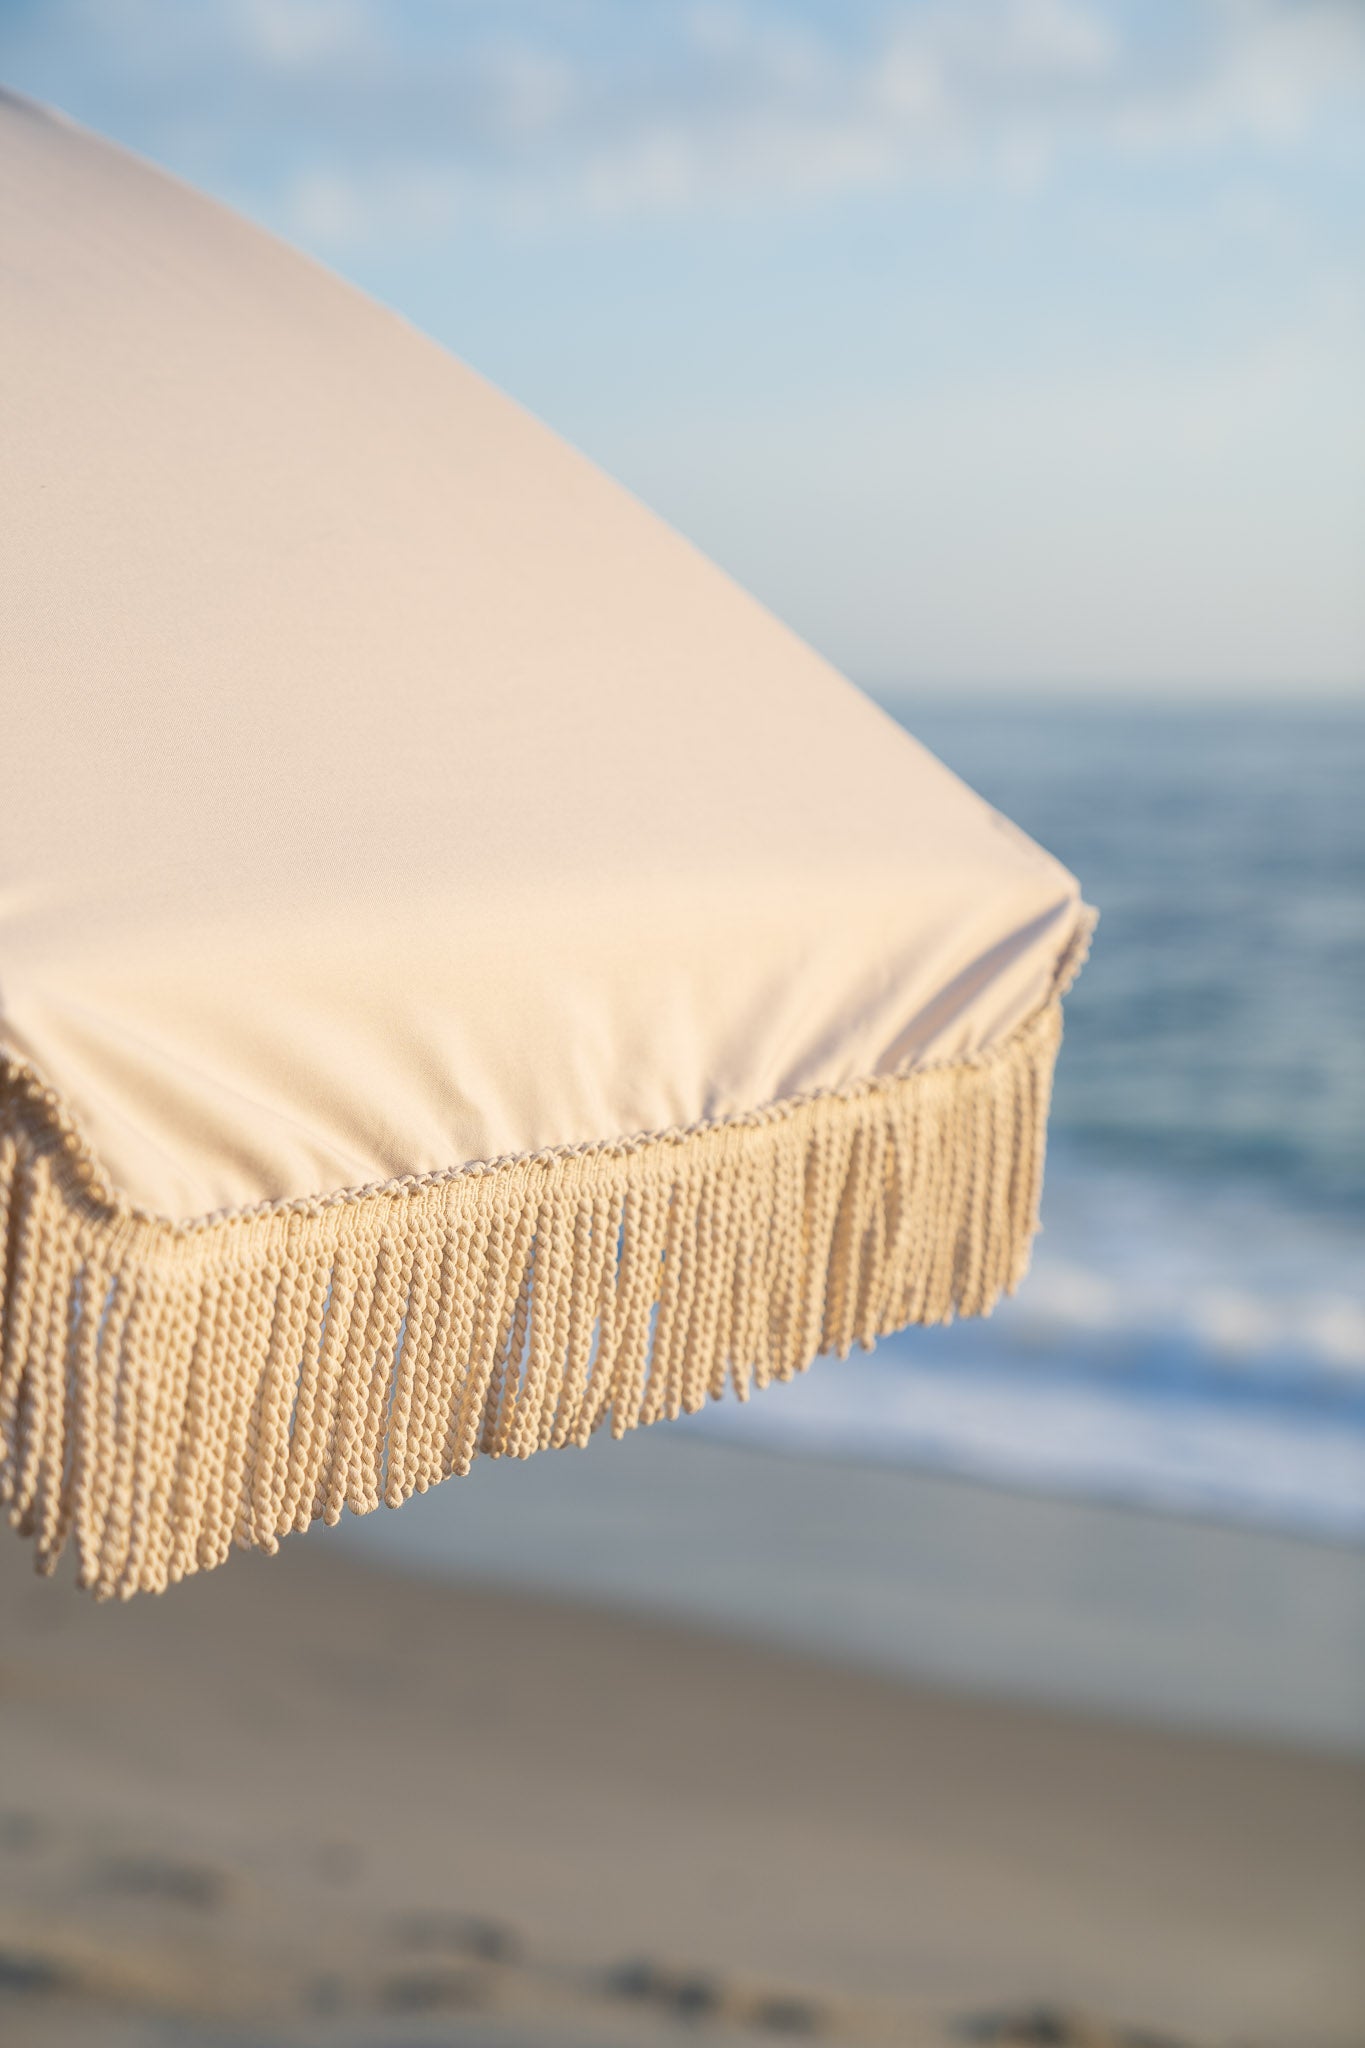 Vintage White Fringe Tassel Patio & Beach Umbrella